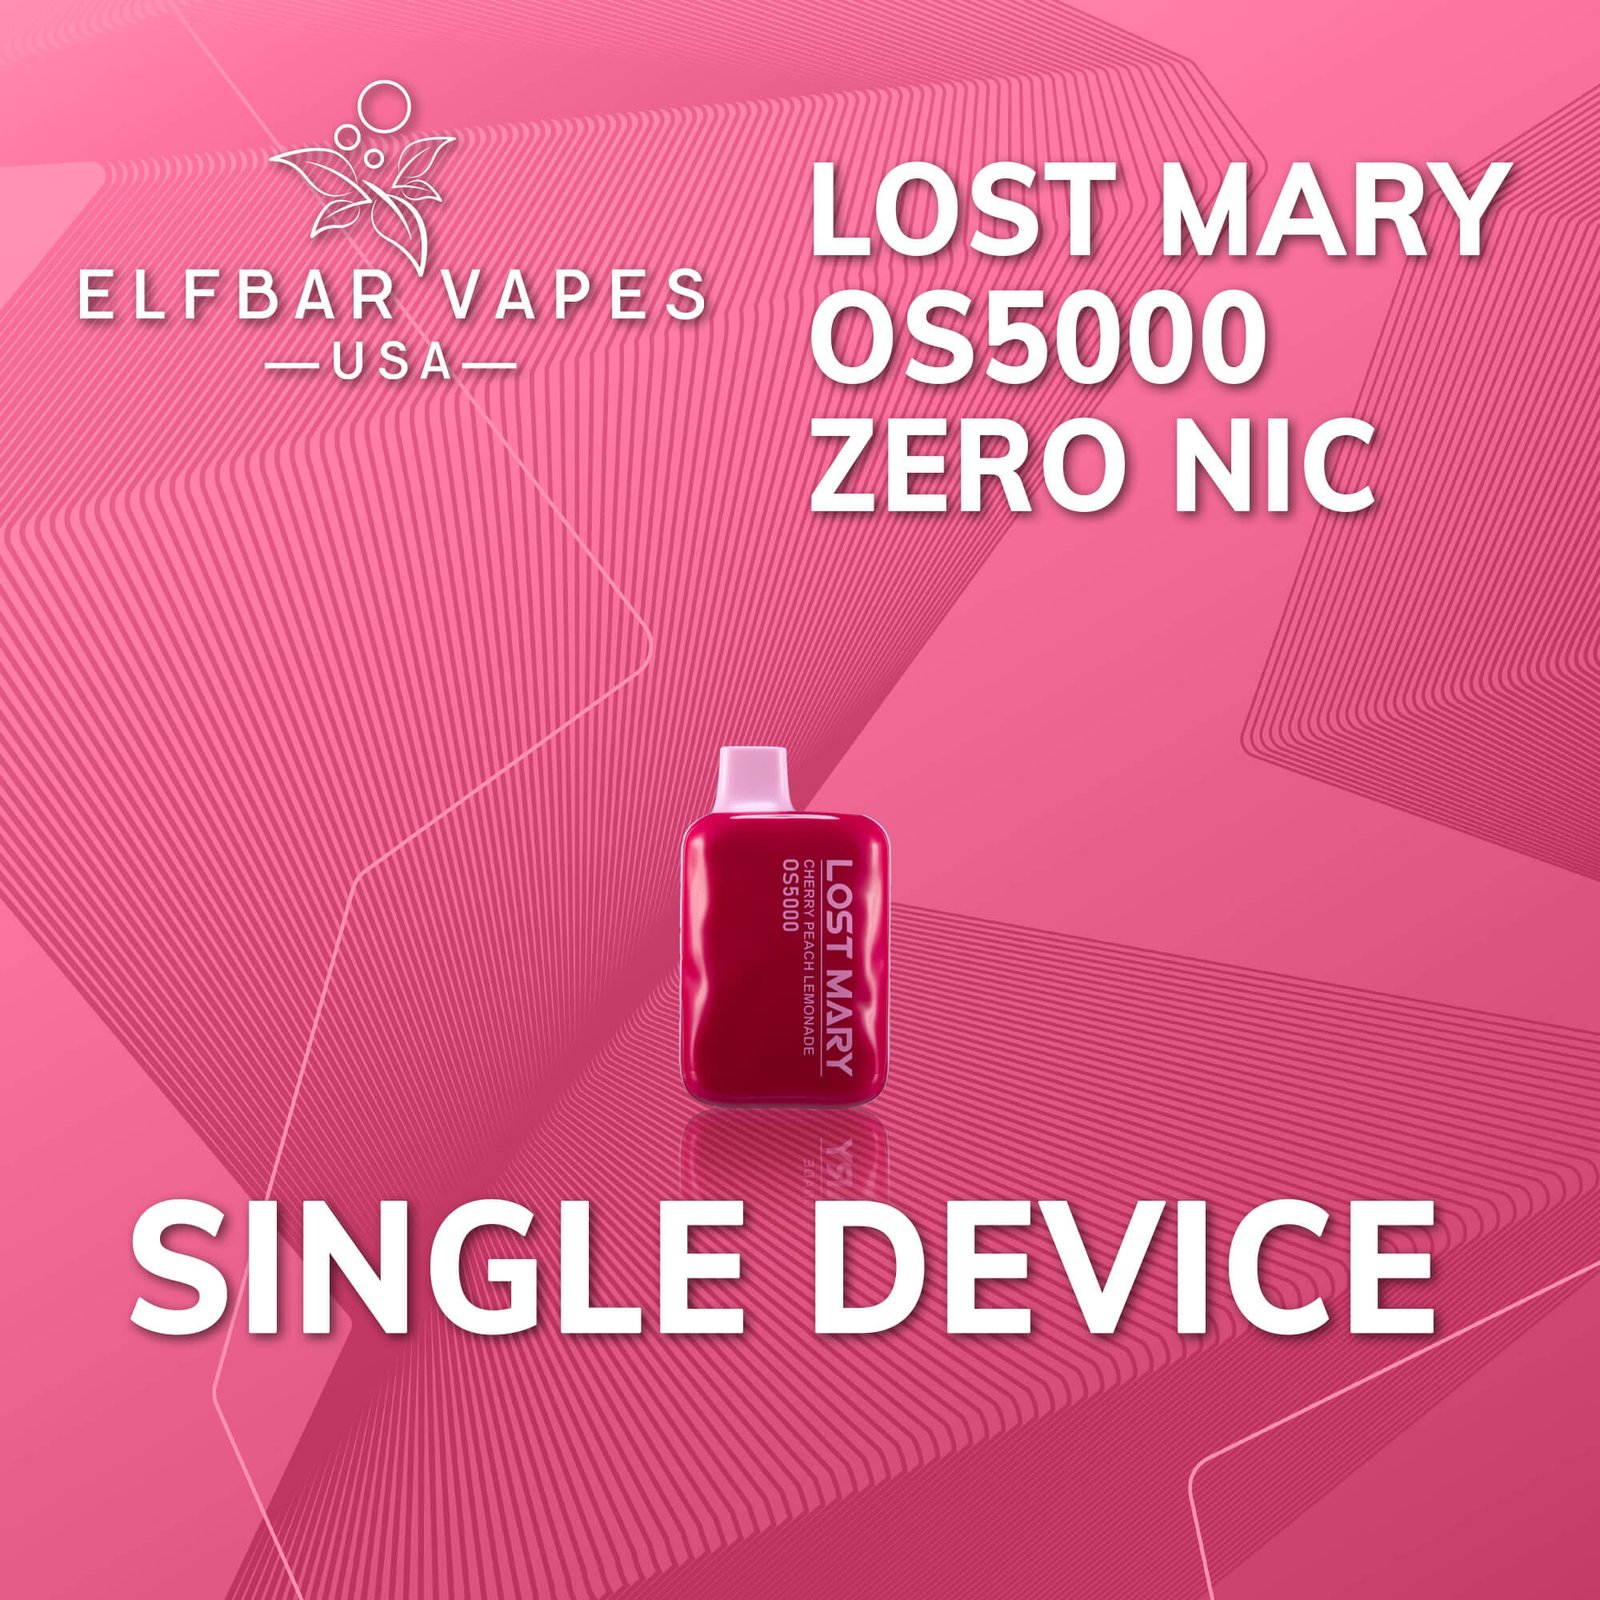 Lost Mary OS5000 Zero Nicotine single device